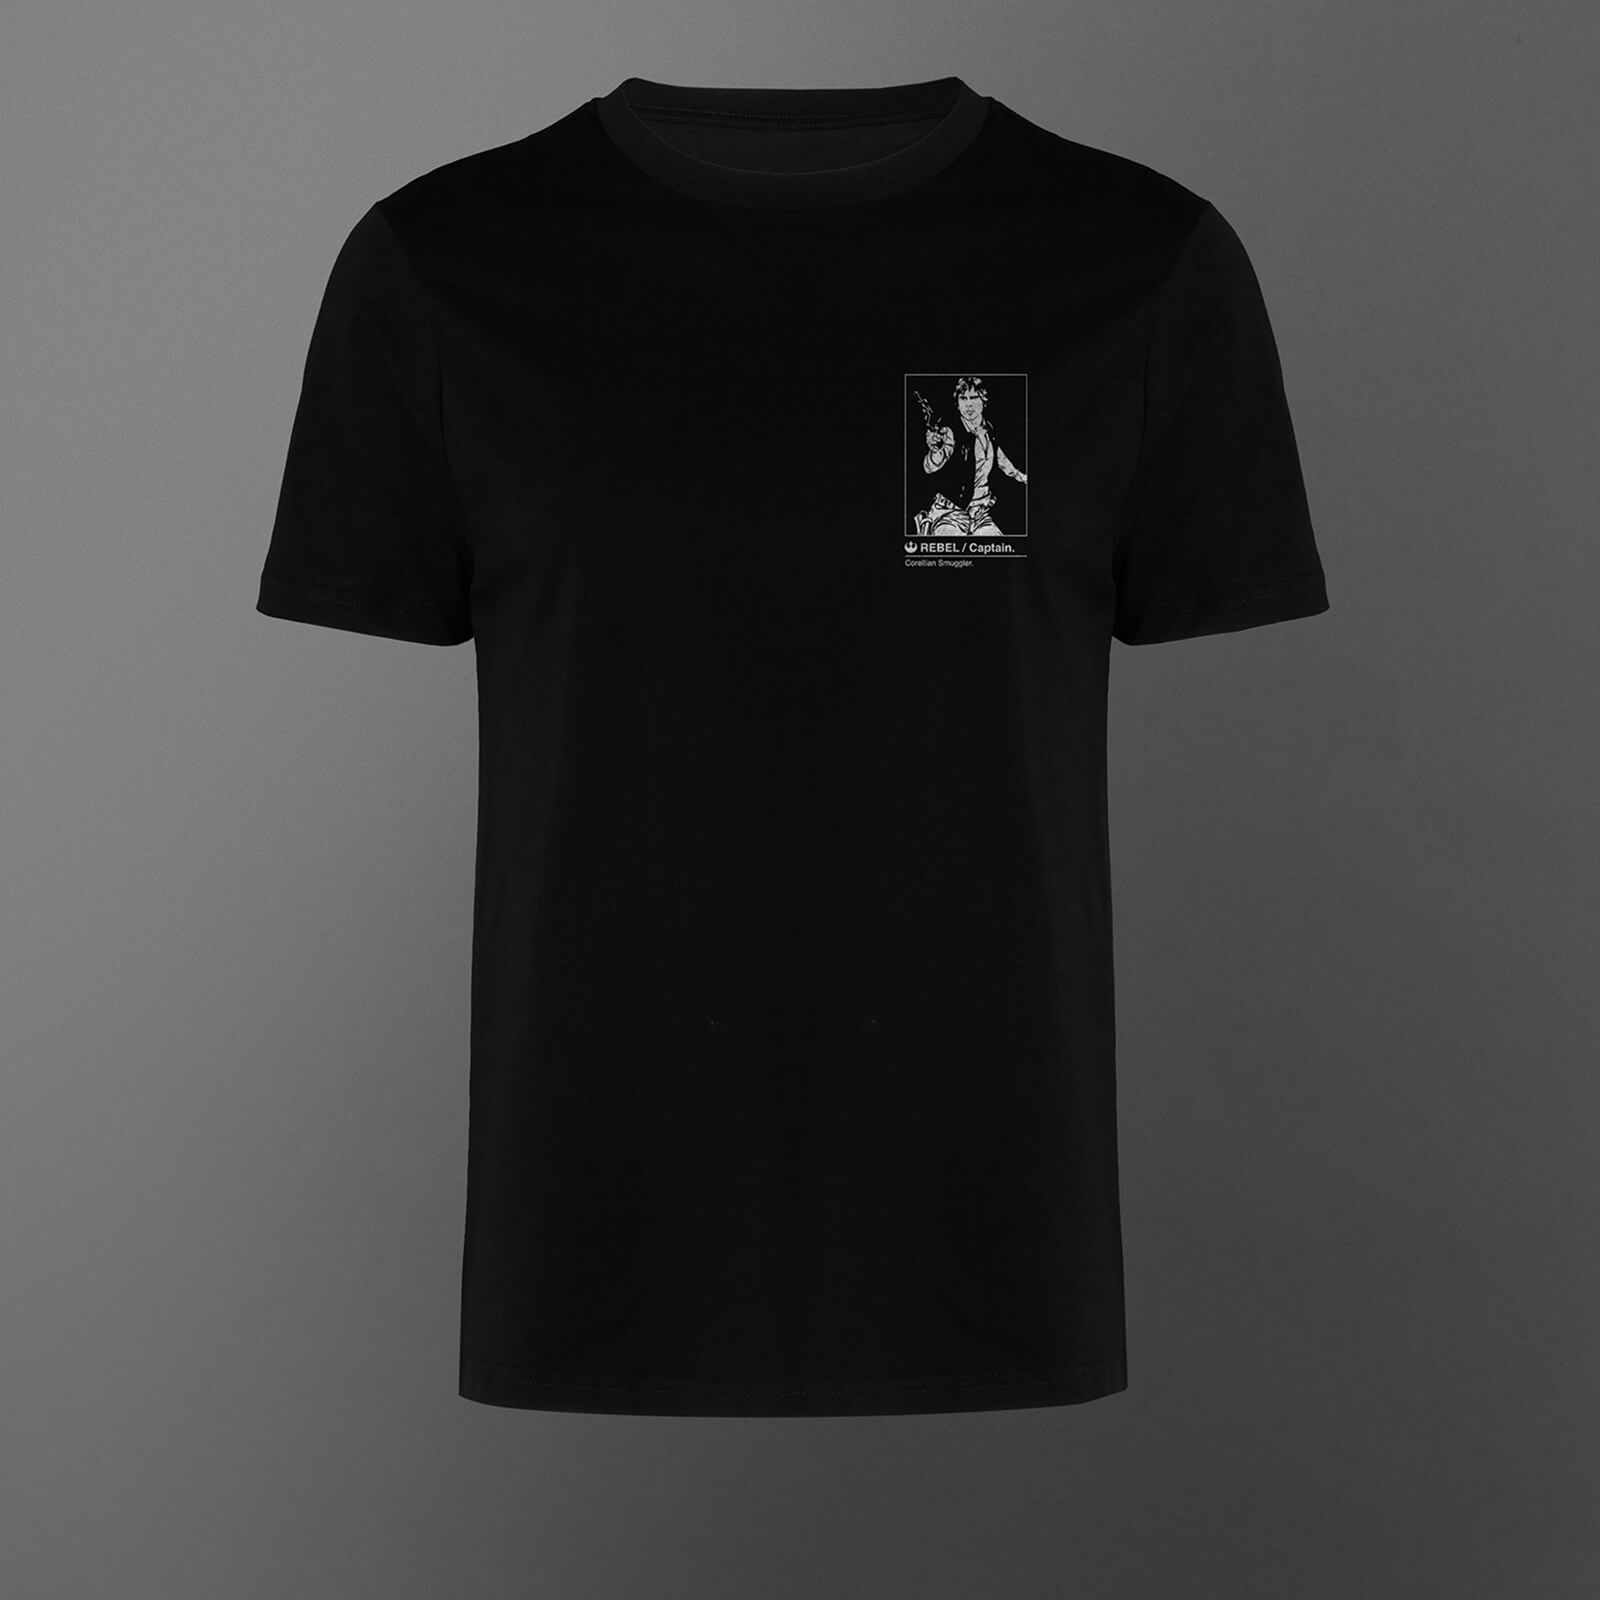 Star Wars Han Solo Unisex T-Shirt - Black - XS - Black